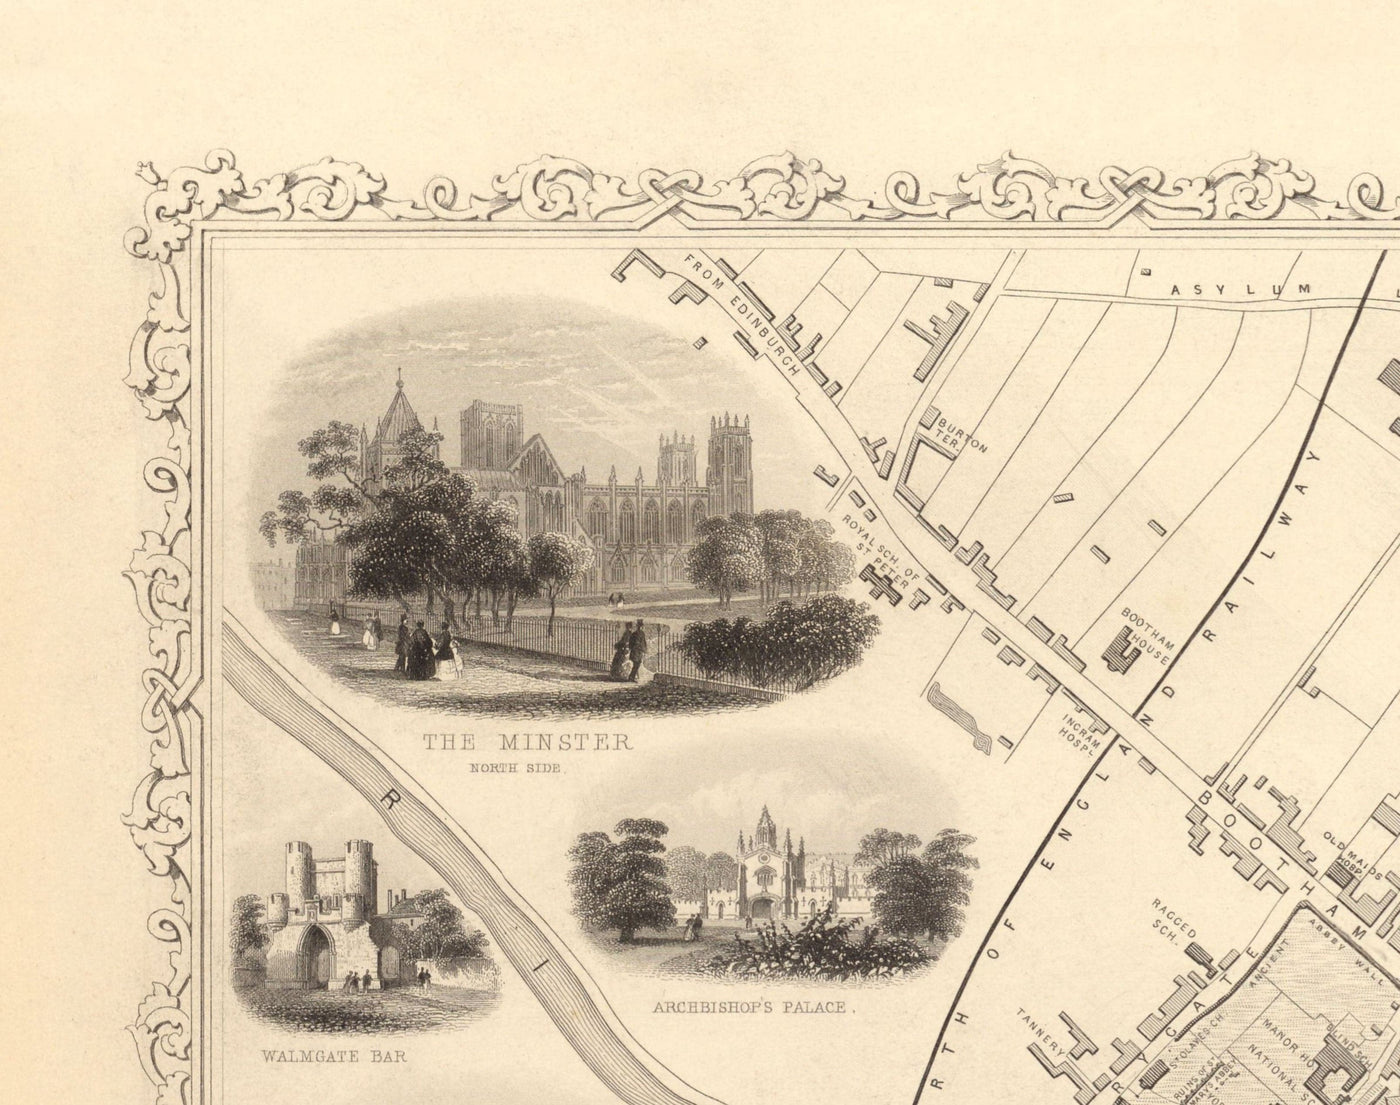 Old Map of York en 1851 por Tallis & Rapkin - City Center Chart, York Minster Cathedral, Río Ouse